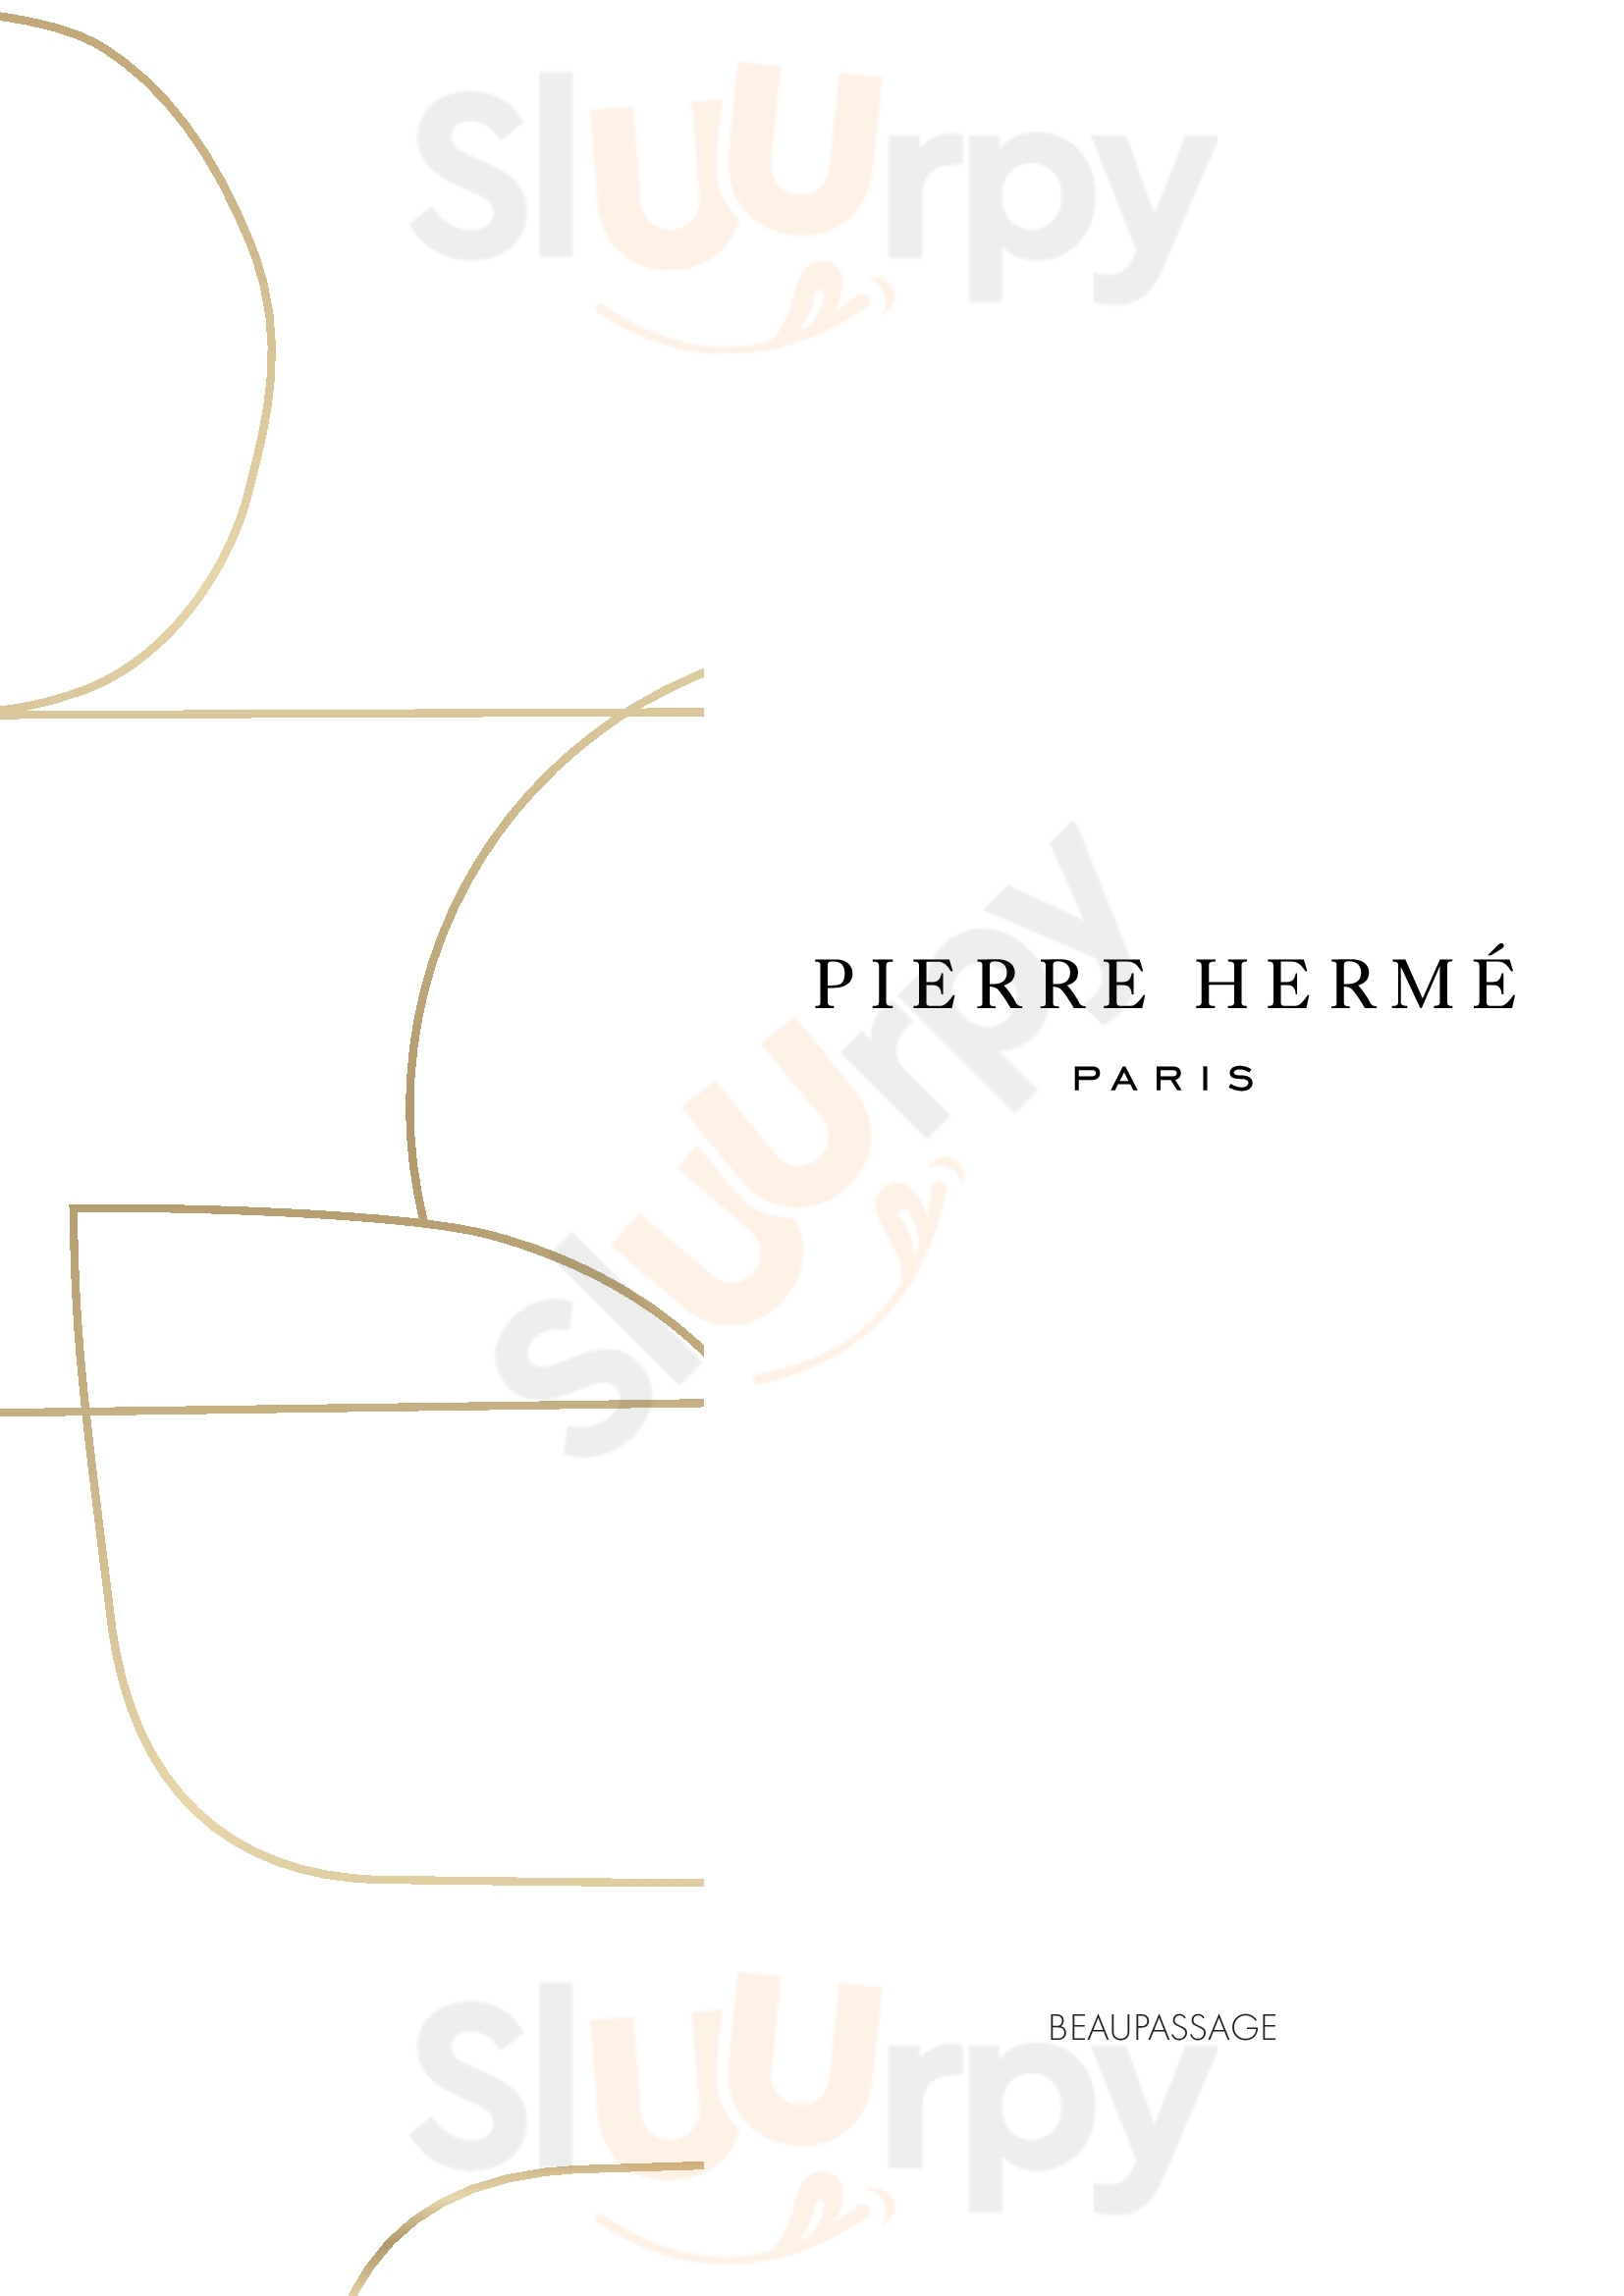 Pierre Hermé - Paul Doumer Paris Menu - 1